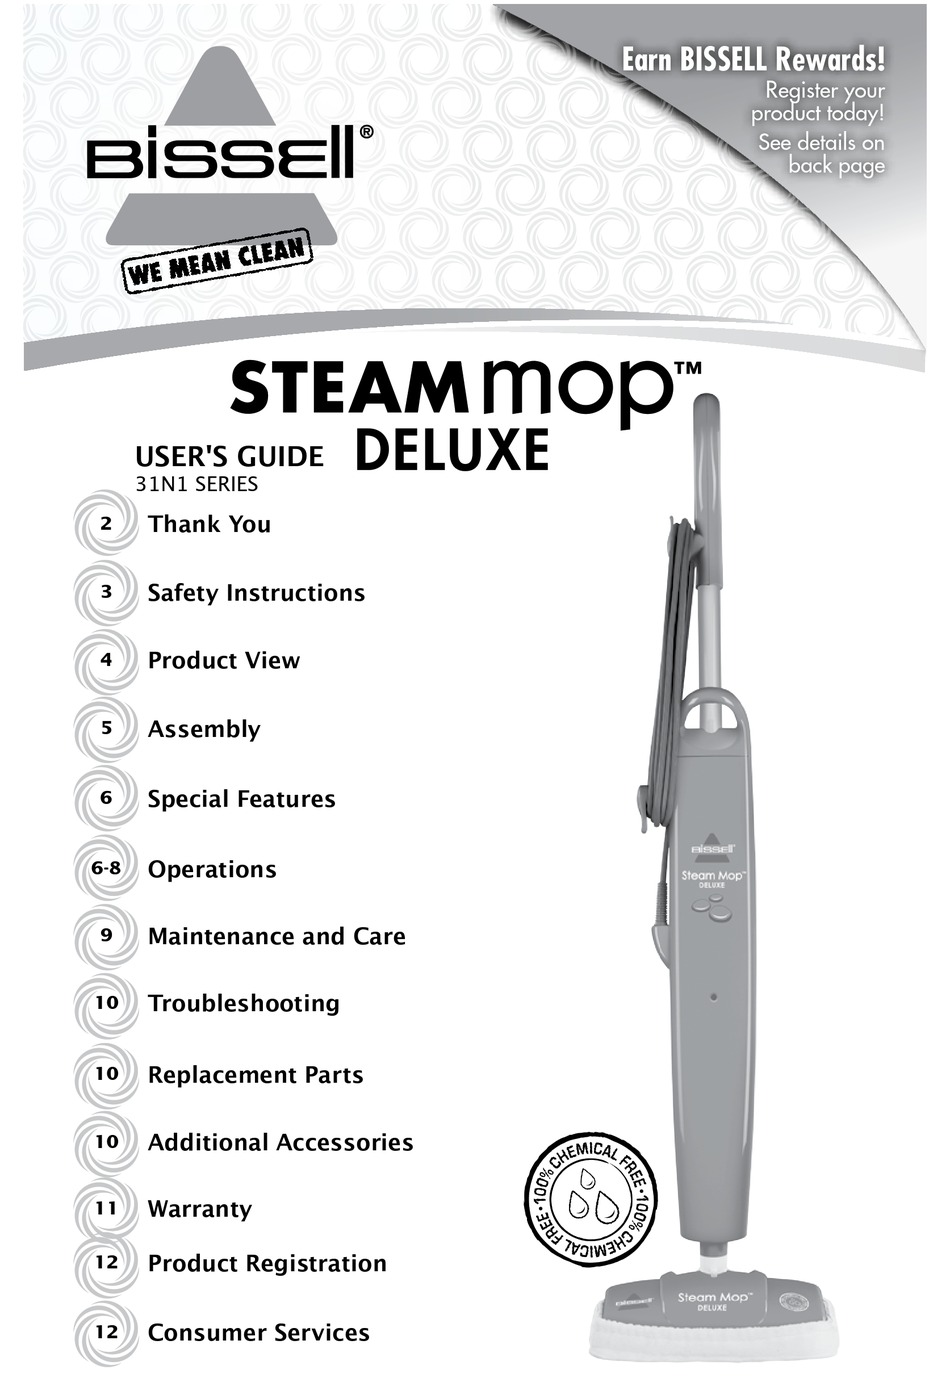 Clean steam mop инструкция фото 4